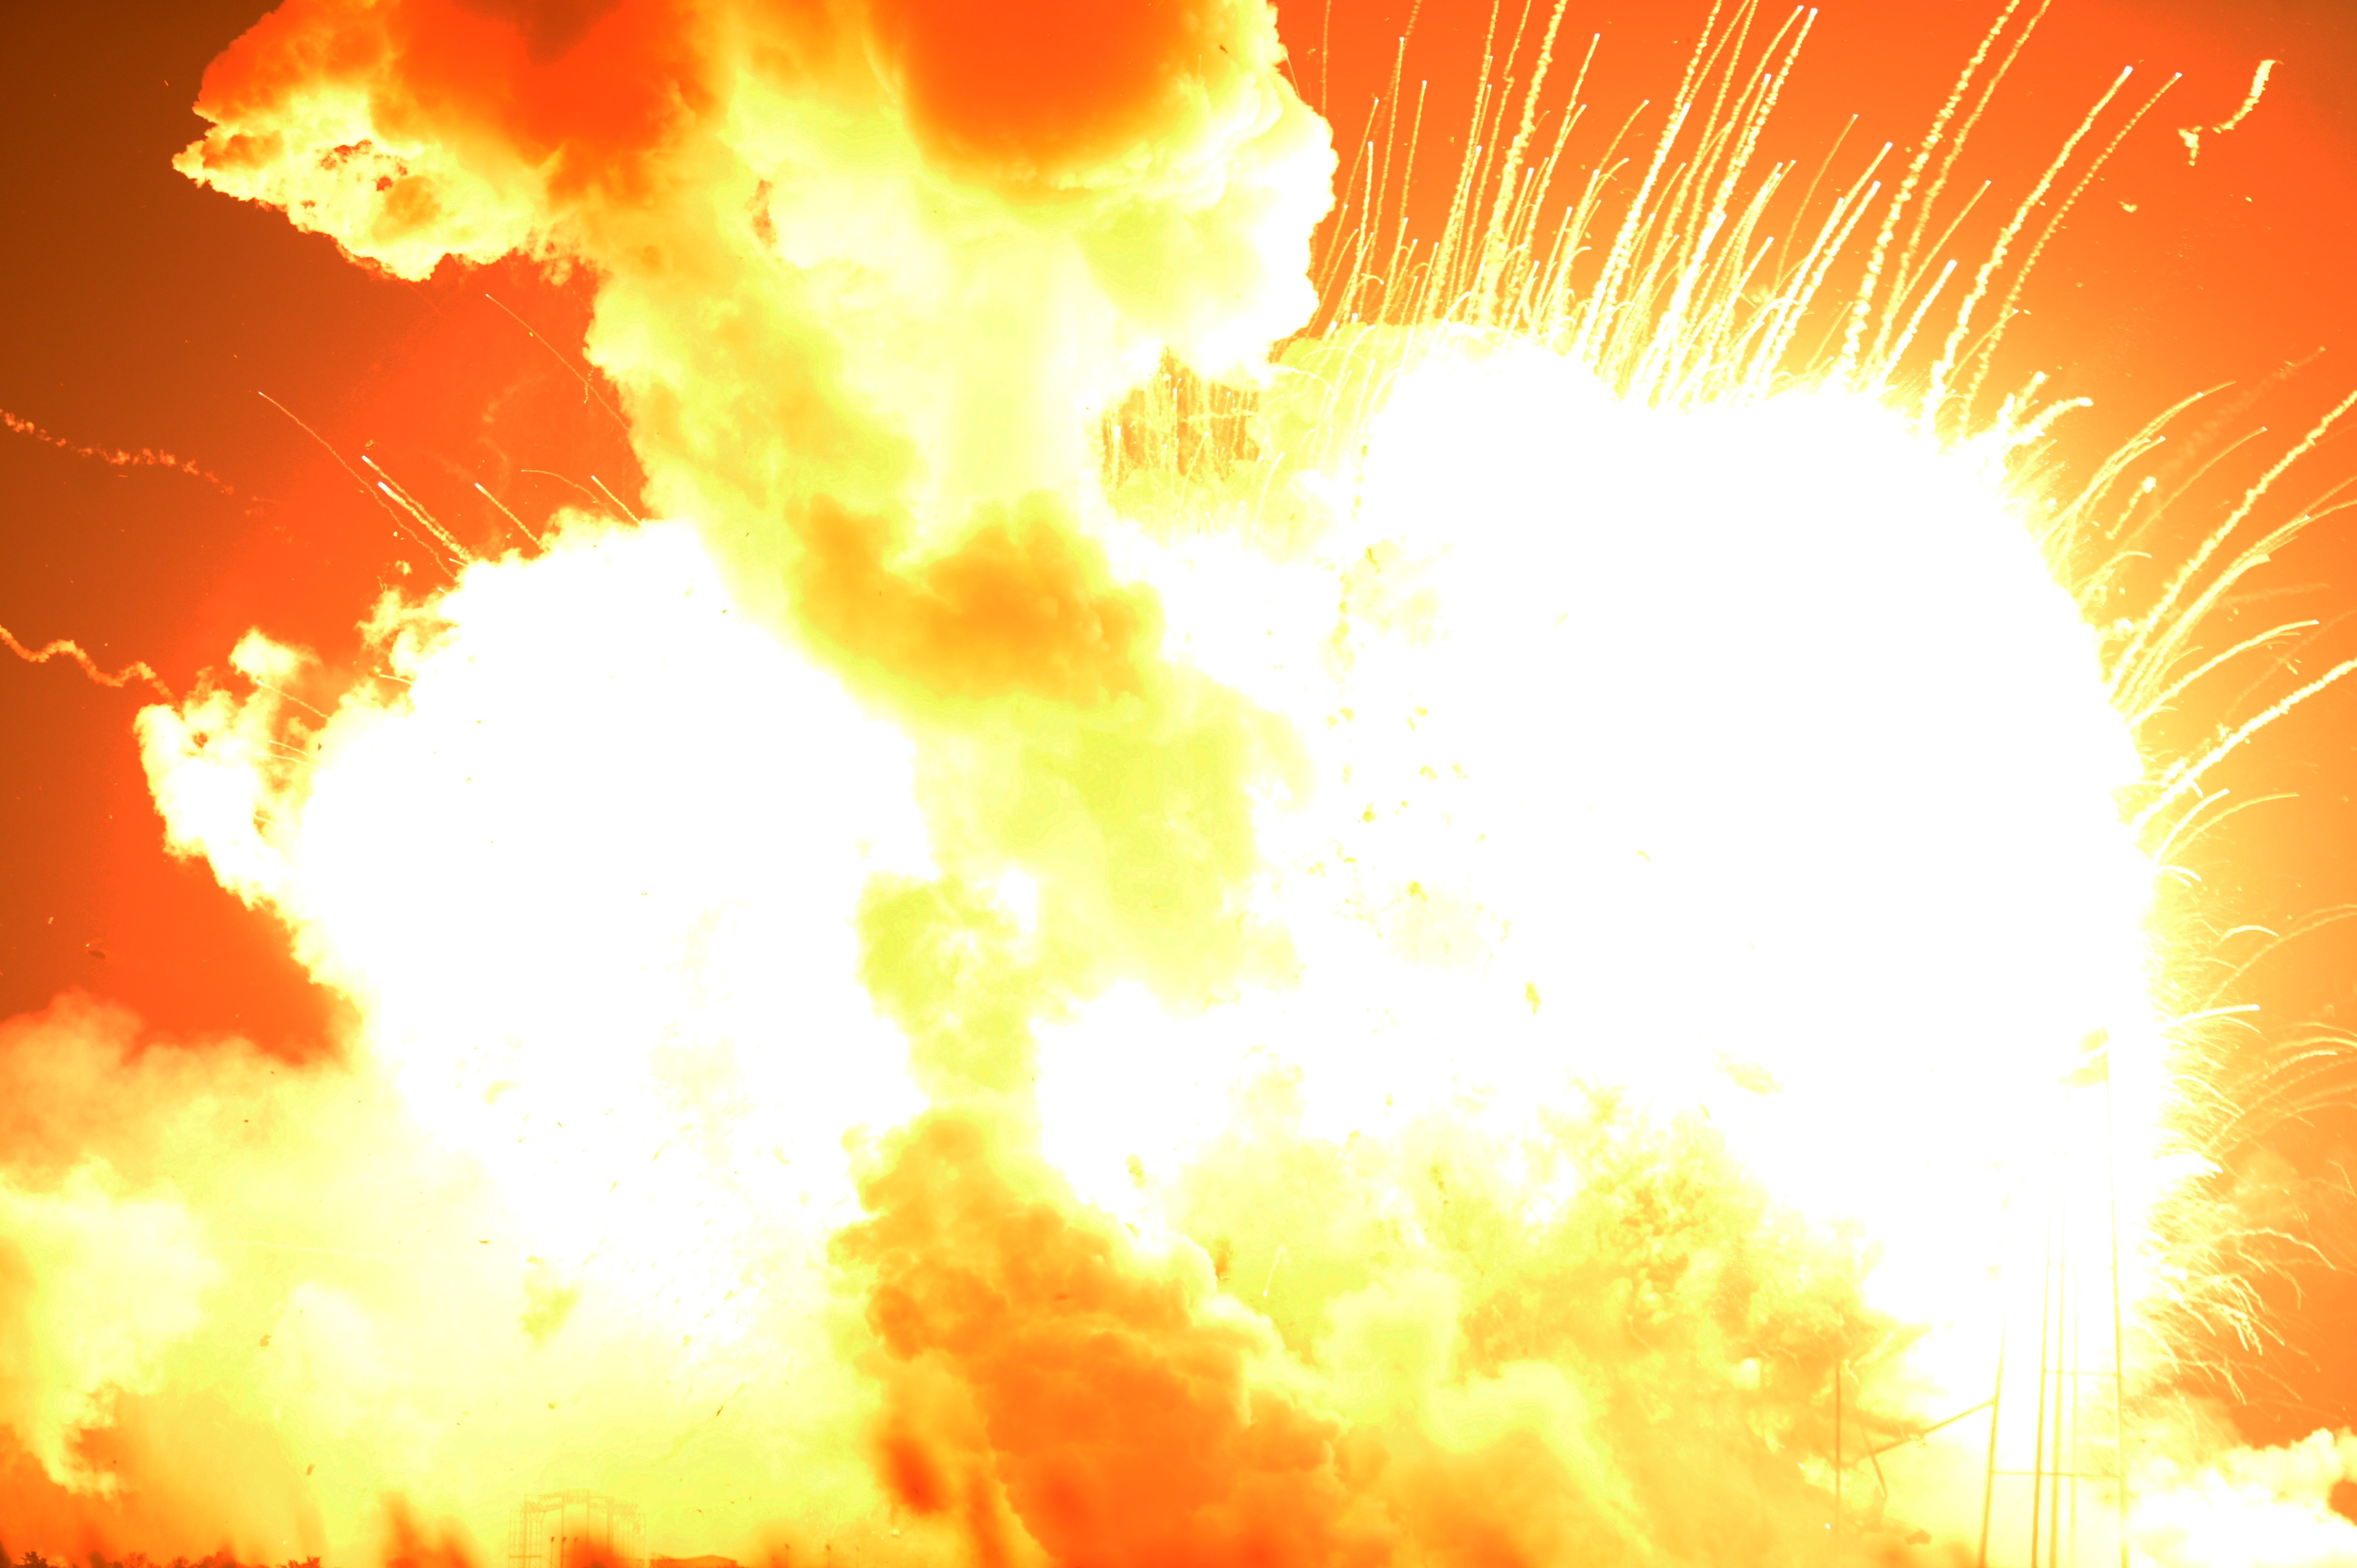 An unmanned Orbital Sciences Corp.'s Antares rocket explodes shortly after takeoff at Wallops Flight Facility on Wallops Island, Va. on Oct. 28, 2014. (Jay Diem&mdash;AP)